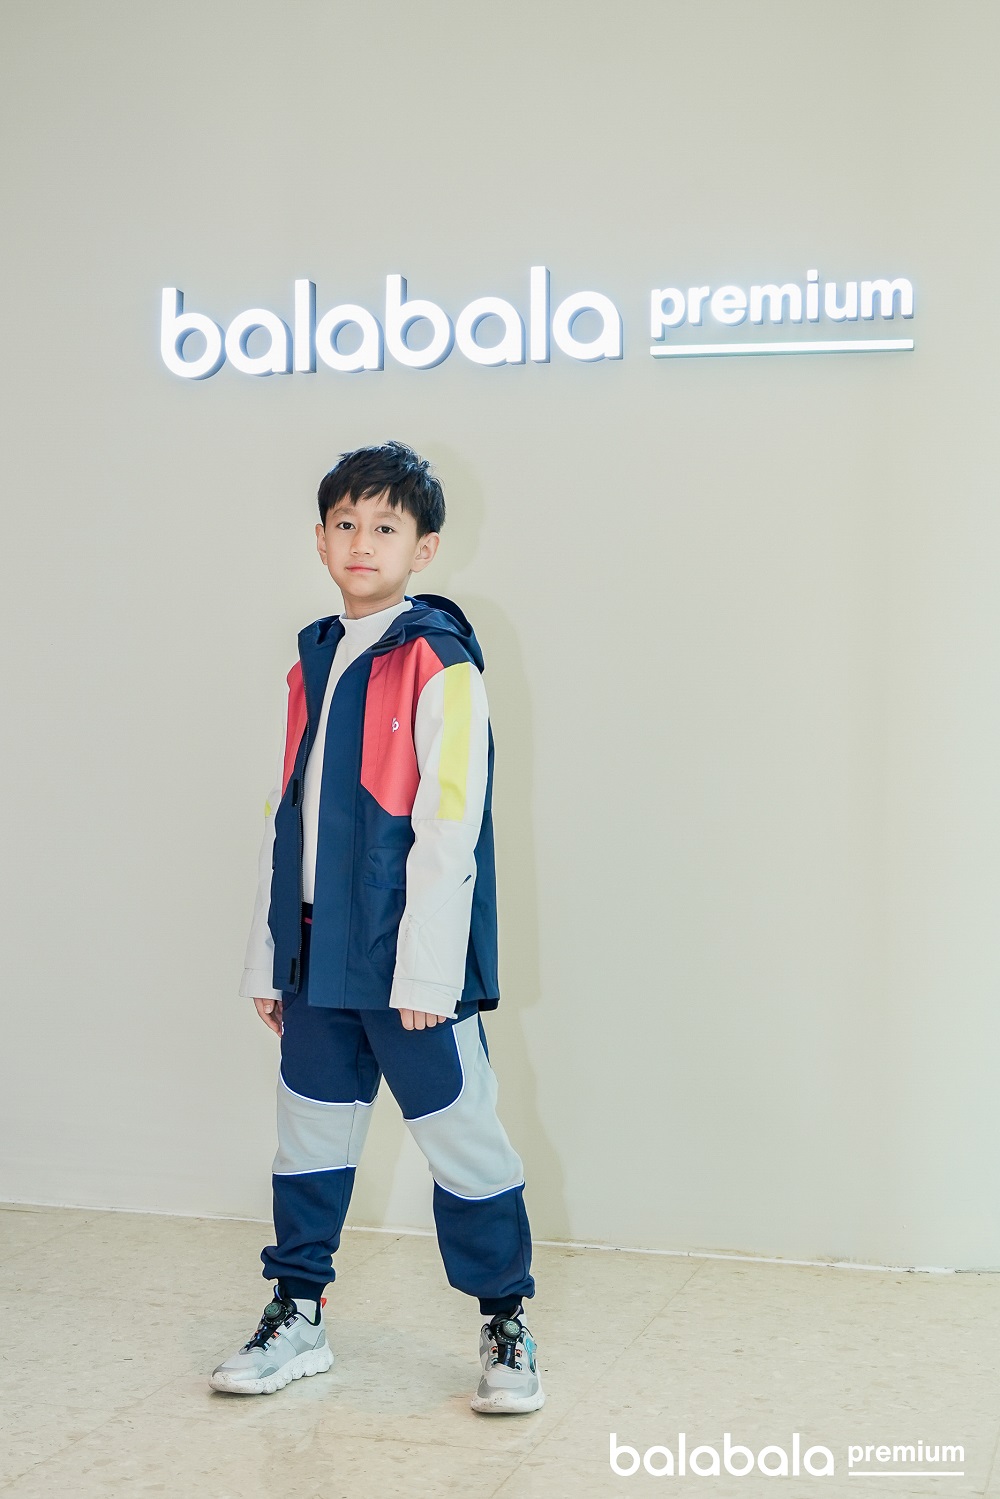 balabala premium华南首店亮相广州高端商场IGC 加速高端童装赛道布局 安排：时尚杂志网